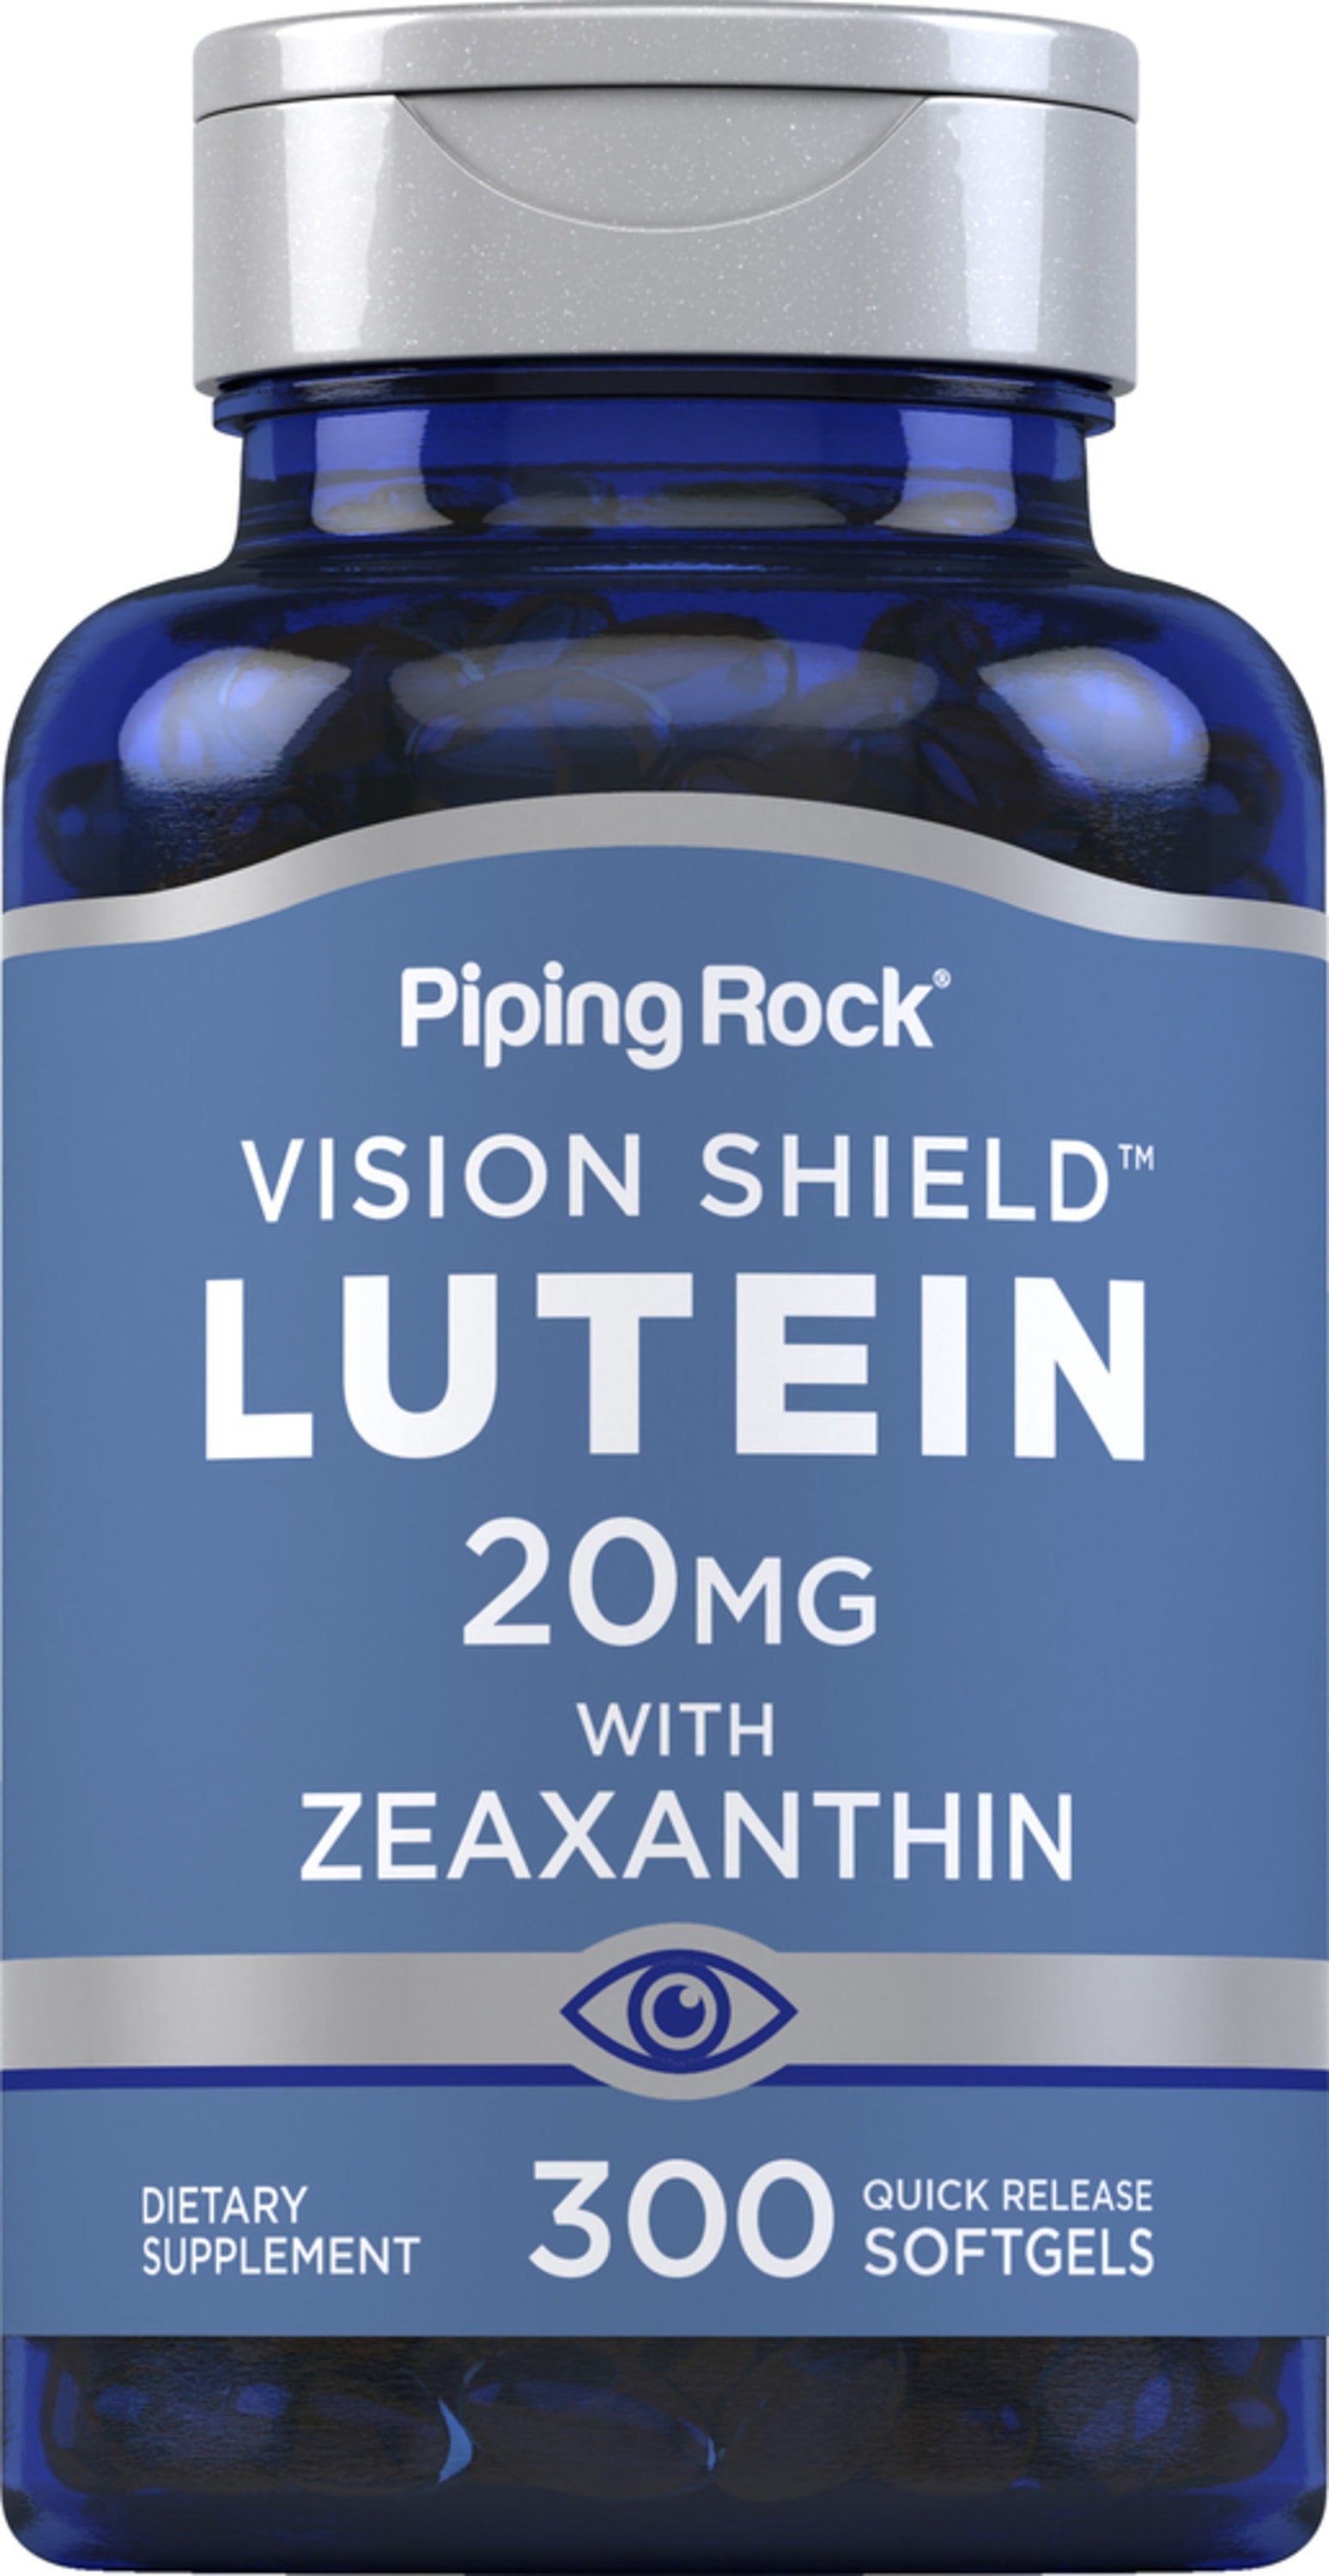 Lutein + Zeaxanthin, 20 mg, 300 Quick Release Softgels